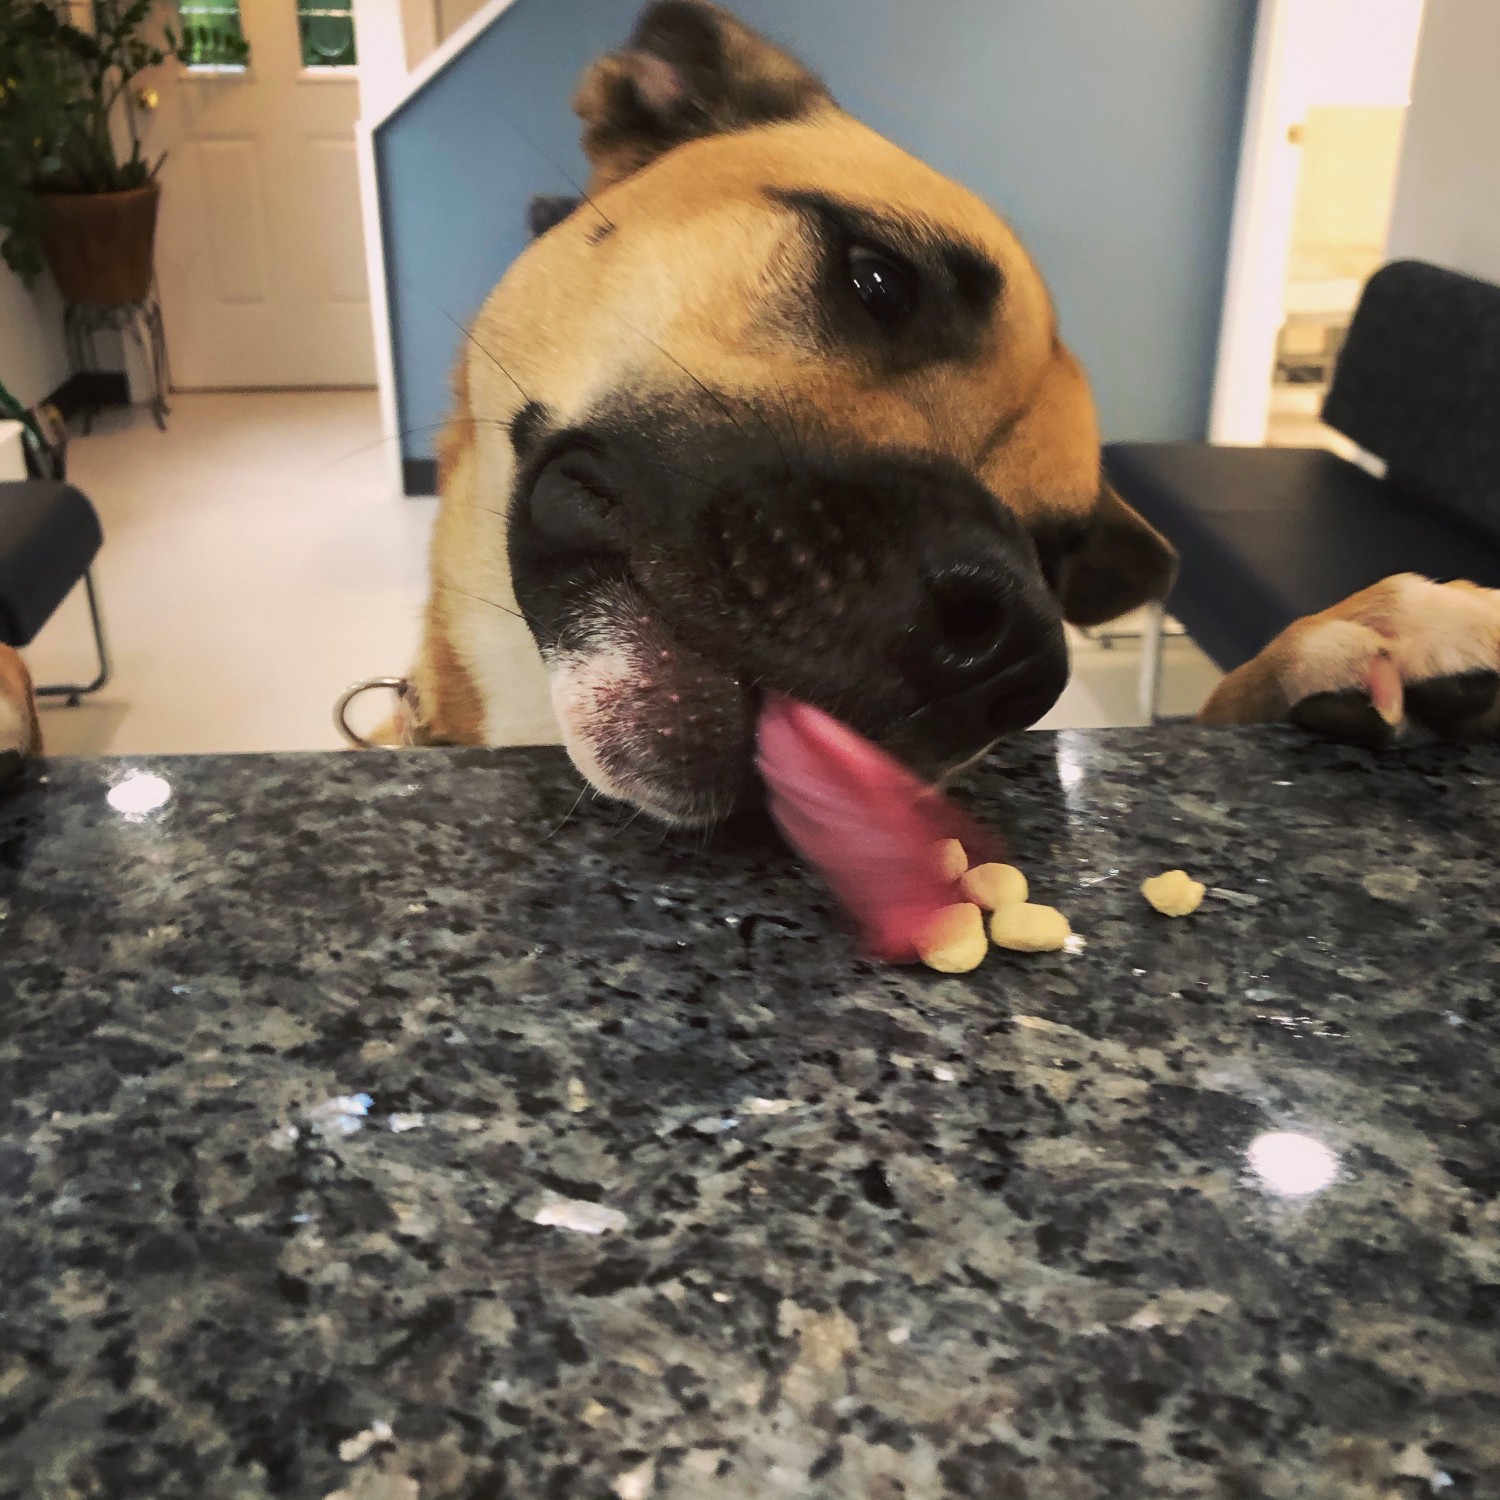 Dog eating treats